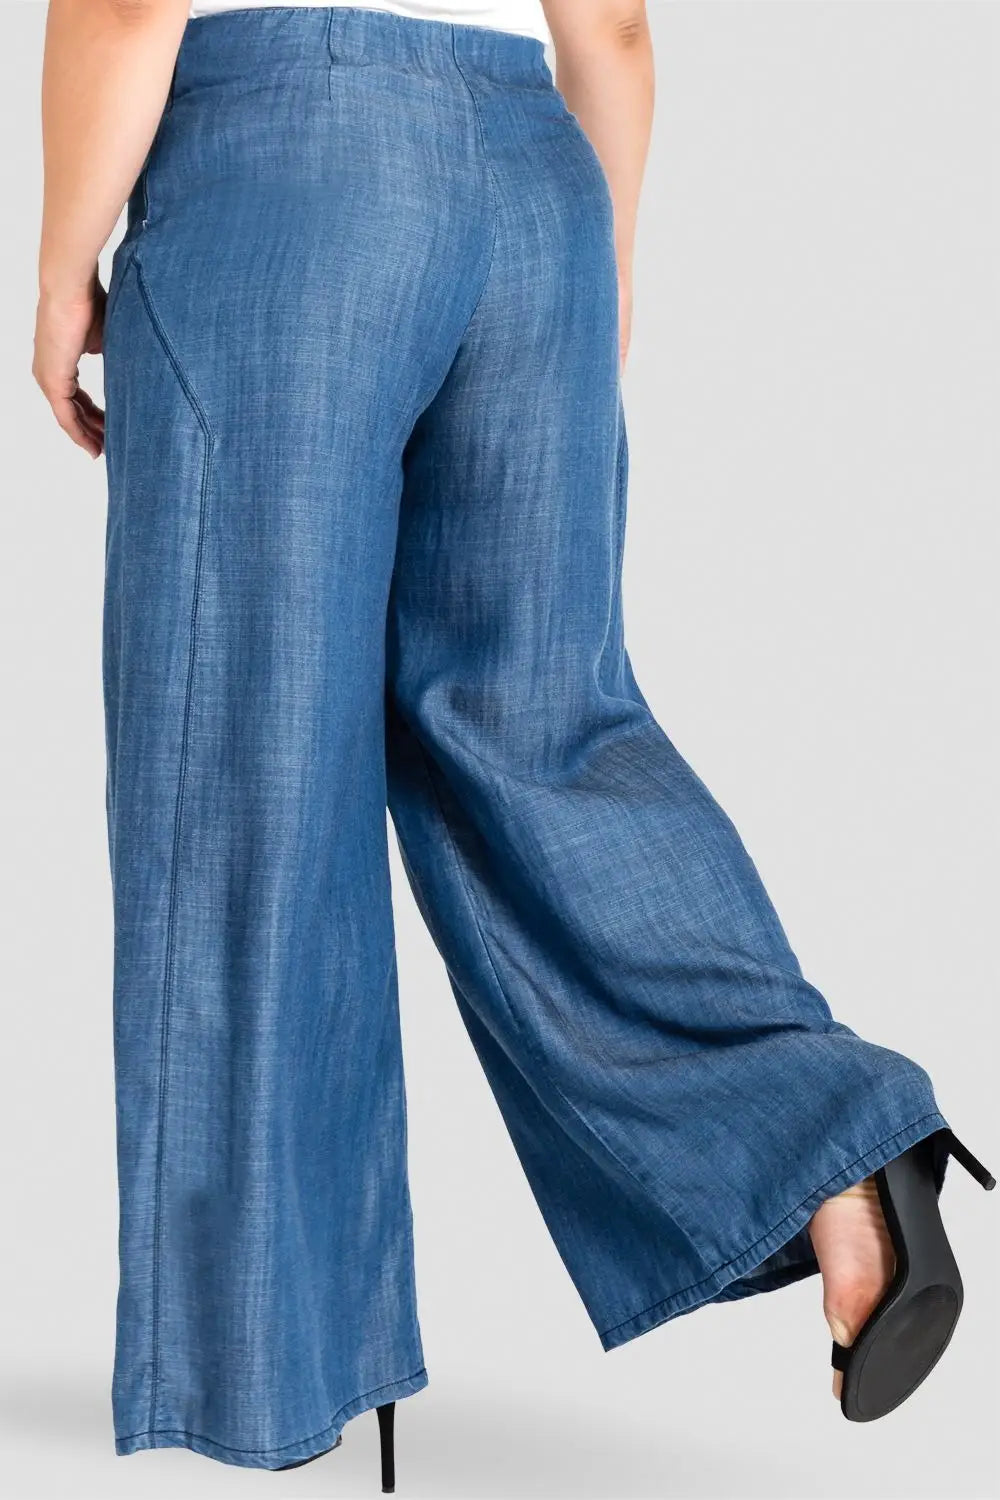 GRAPENT Jeans Womens Pants Dressy Casual Palazzo Pants Summer